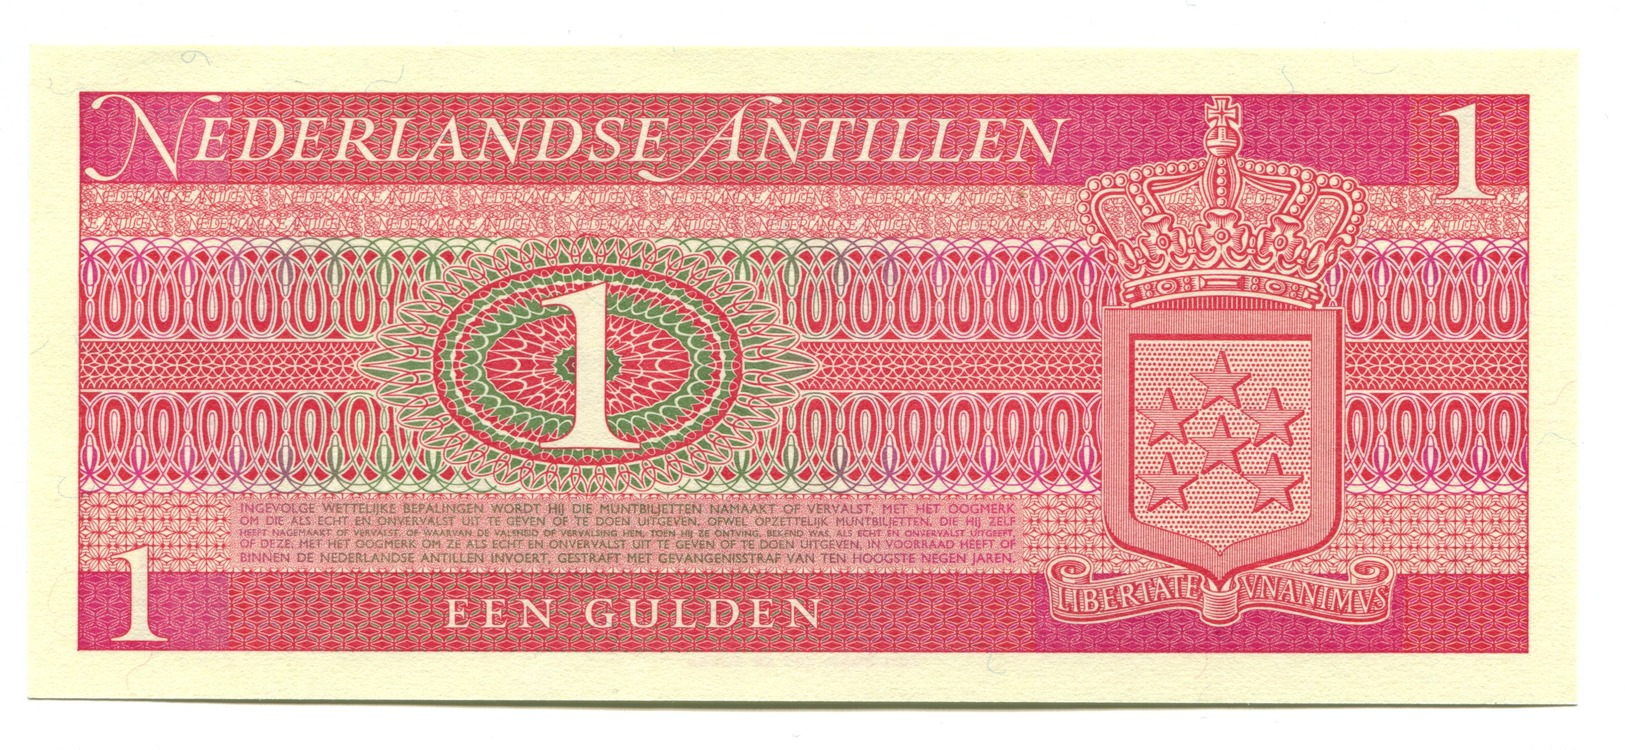 1970 Netherlands Antilles UNC 1 Gulden Banknote - East Carribeans